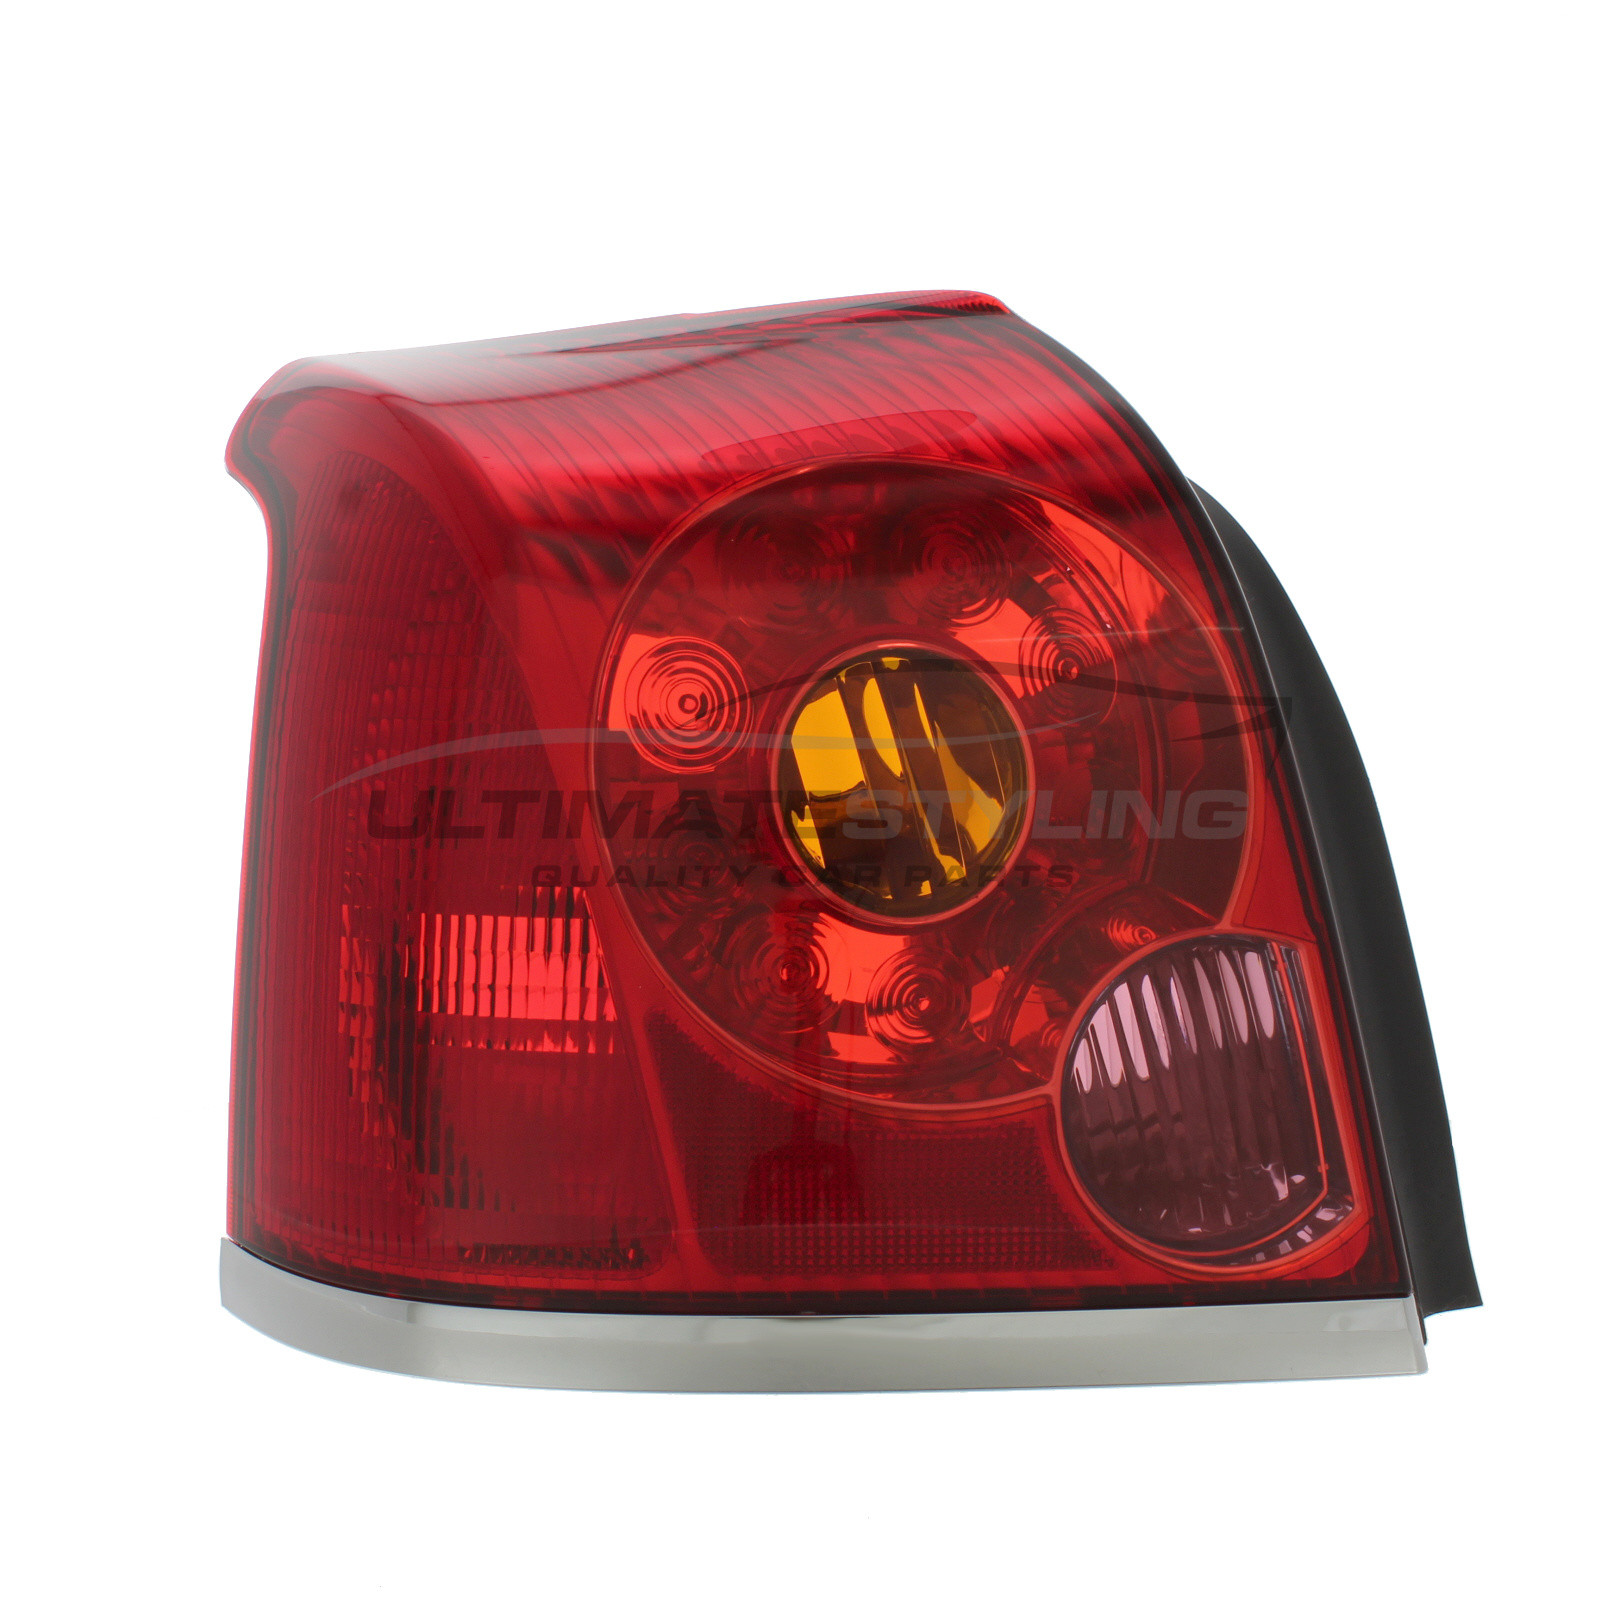 Toyota Avensis Rear Light / Tail Light - Passenger Side (LH), Rear